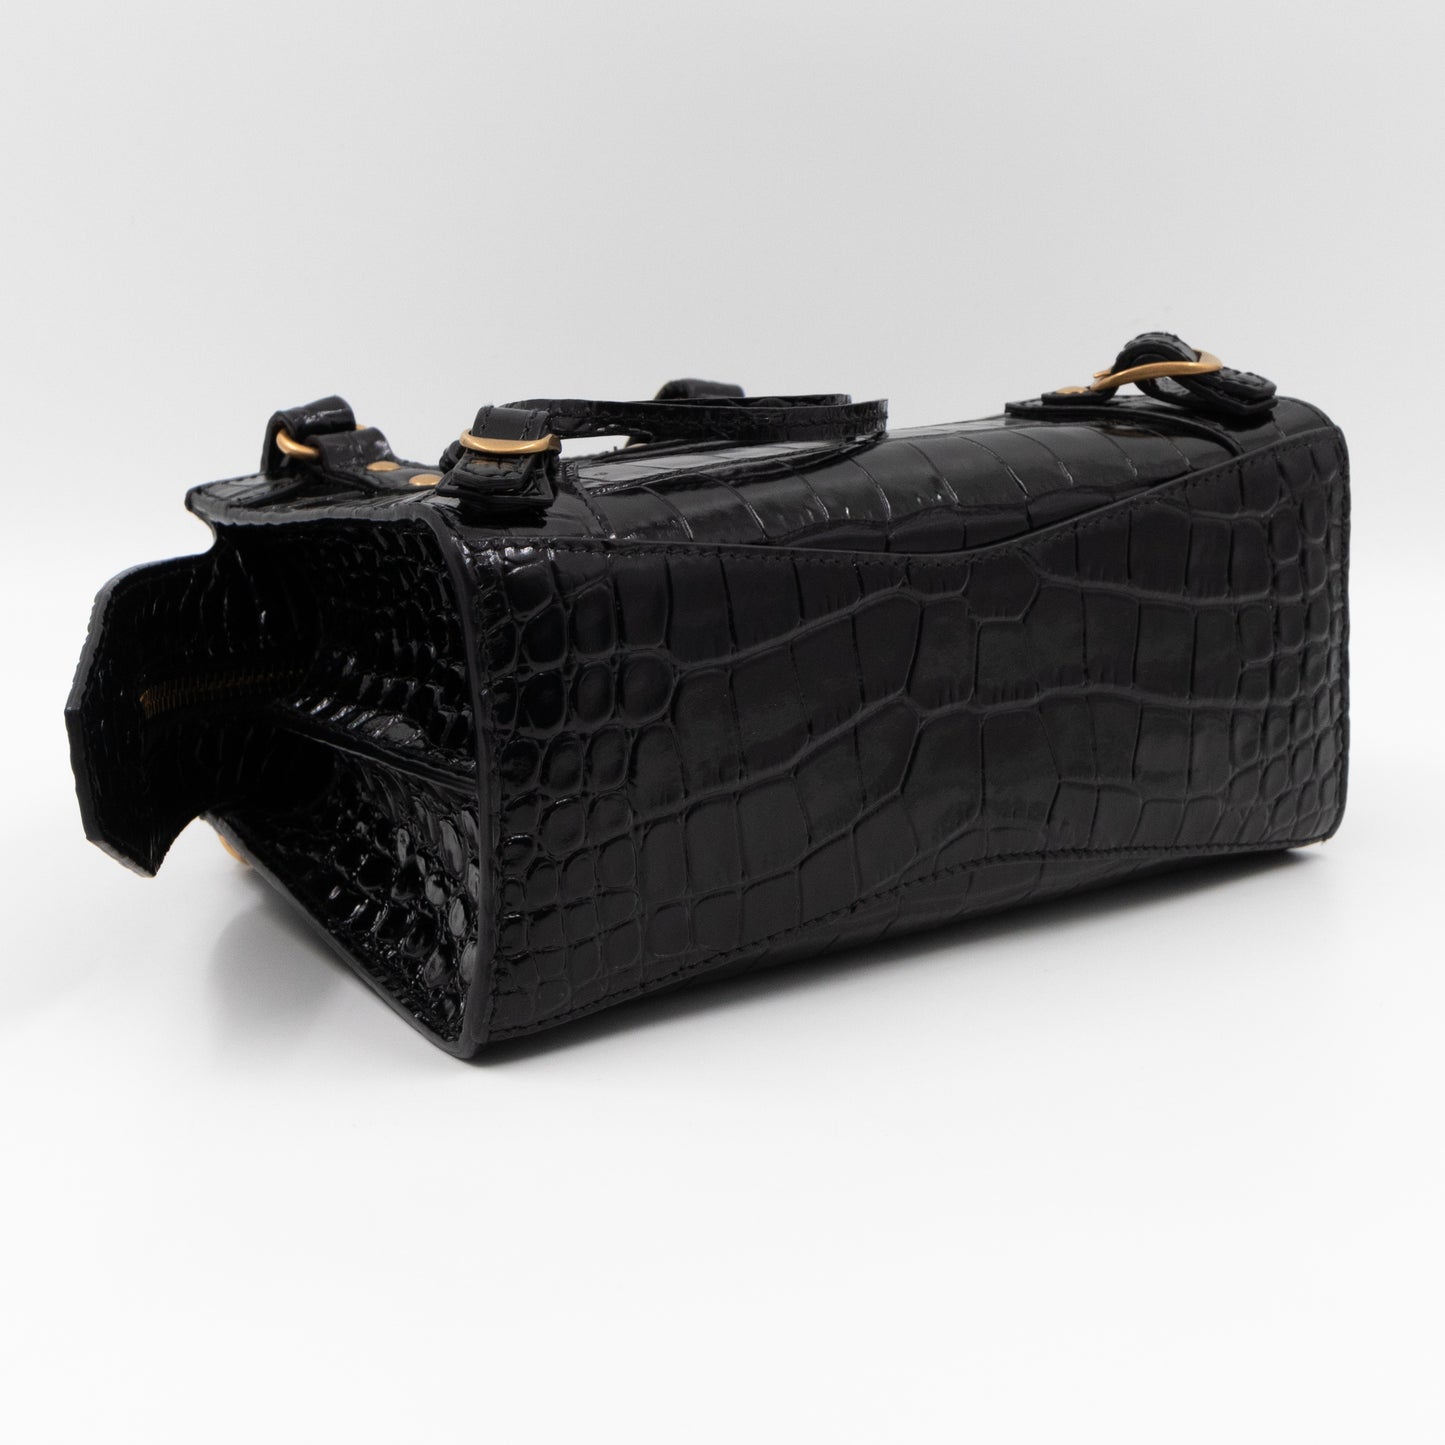 Neo Classic City Mini Black Croc Embossed Leather